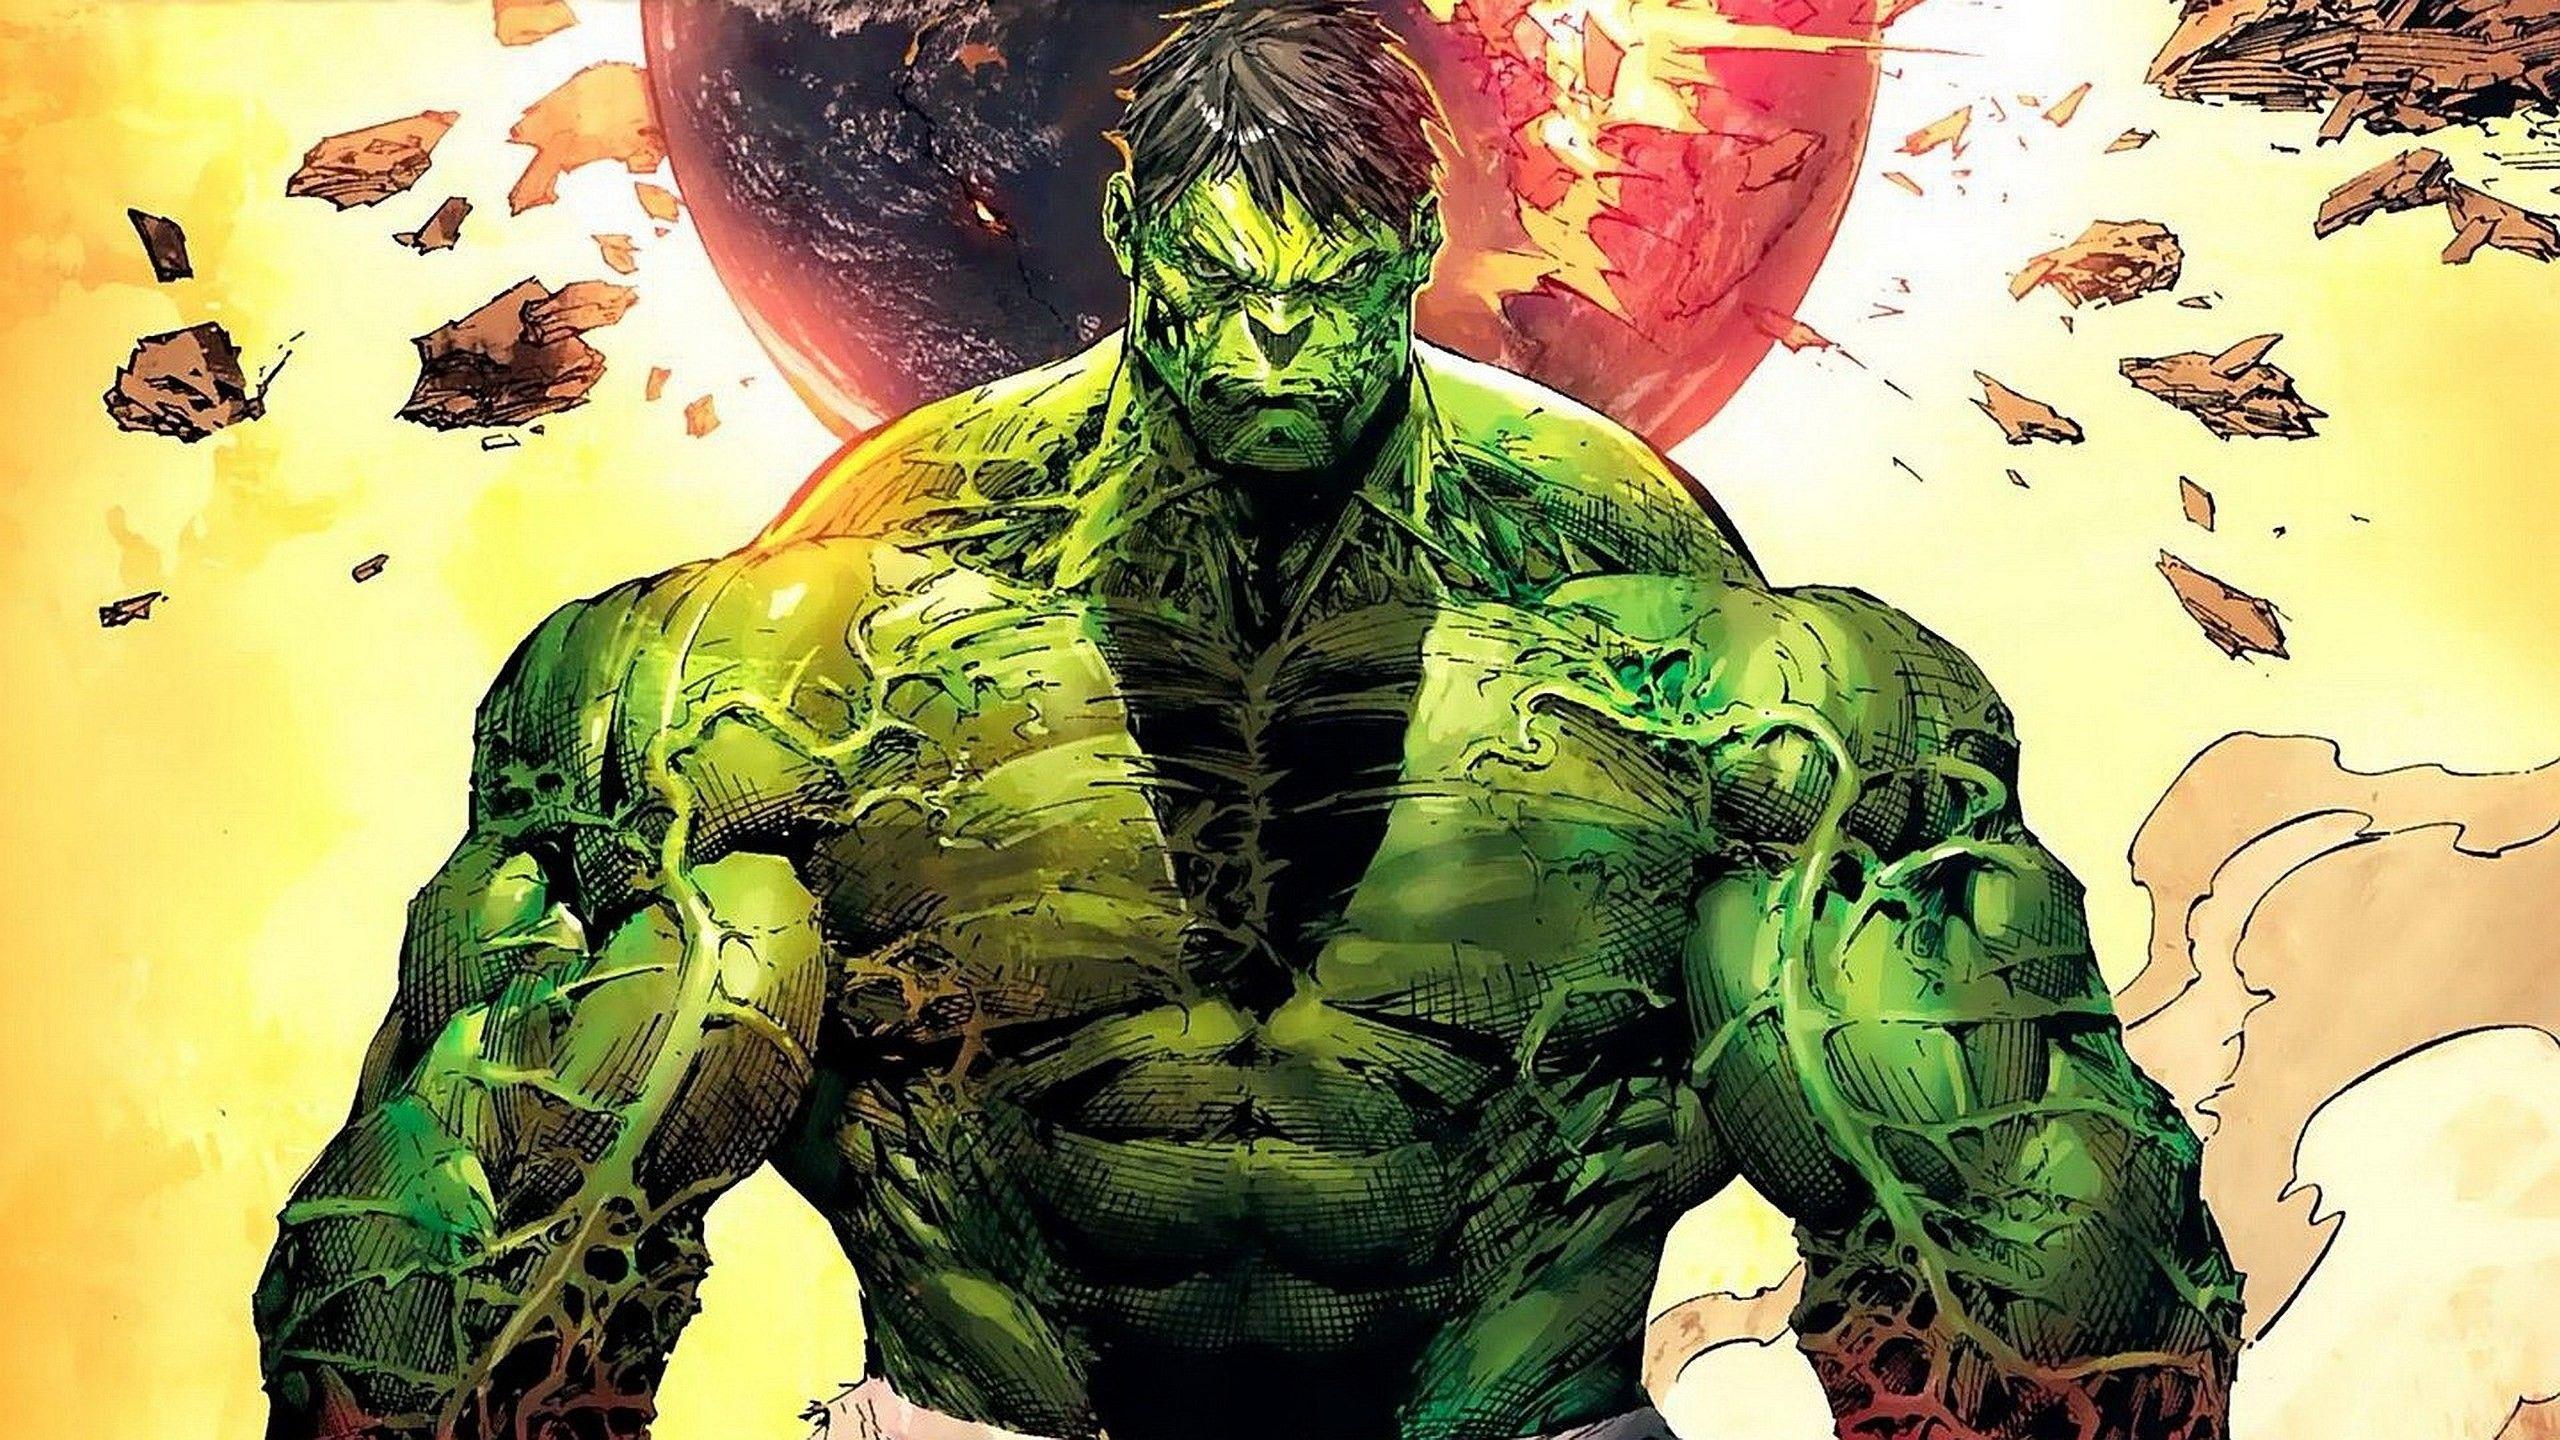 World War Hulk from Marvel Comics.